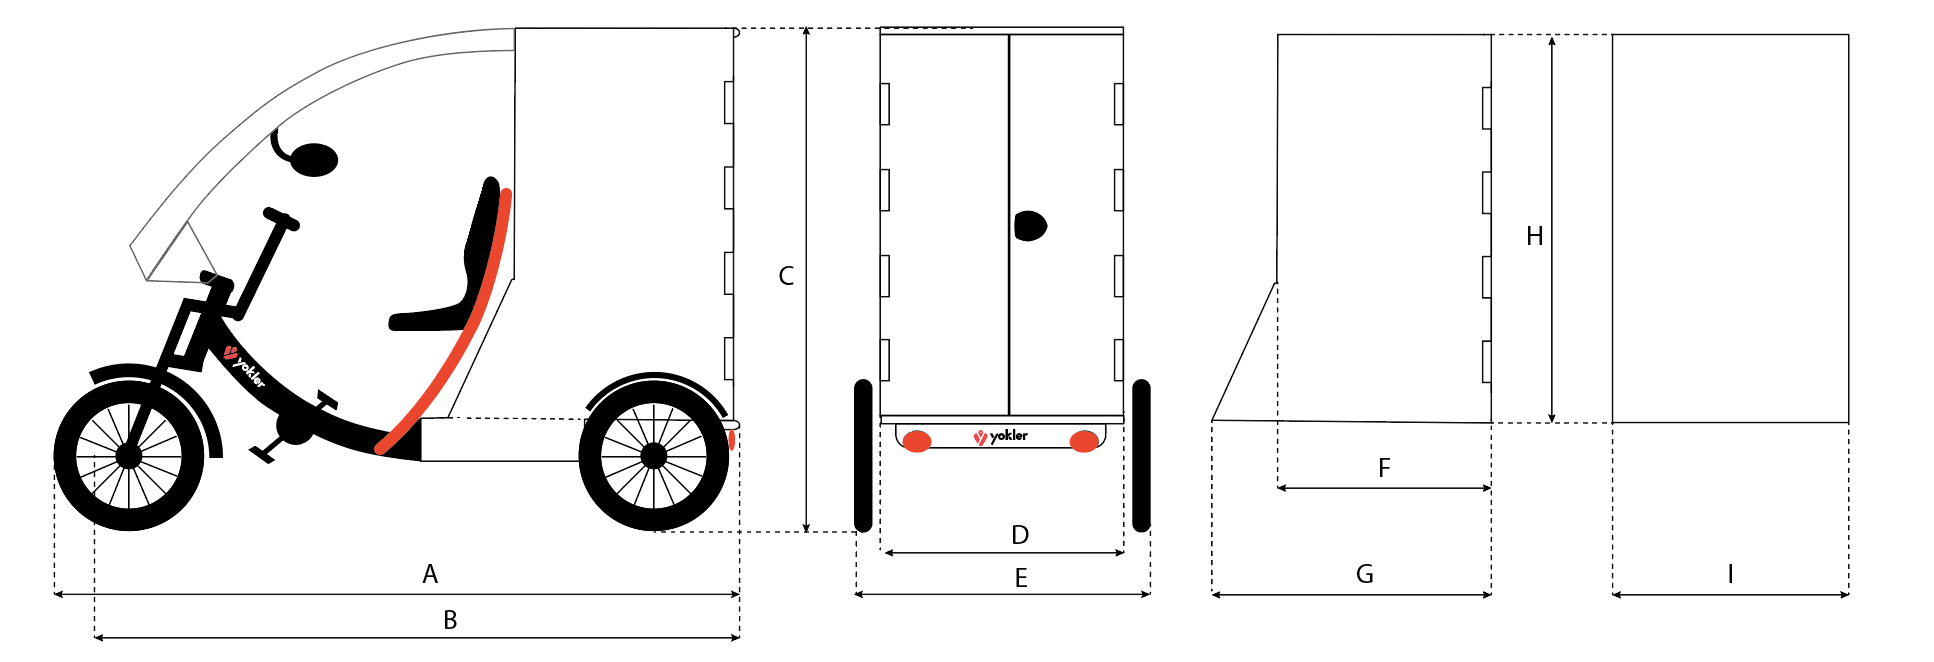 Dimension cargobike